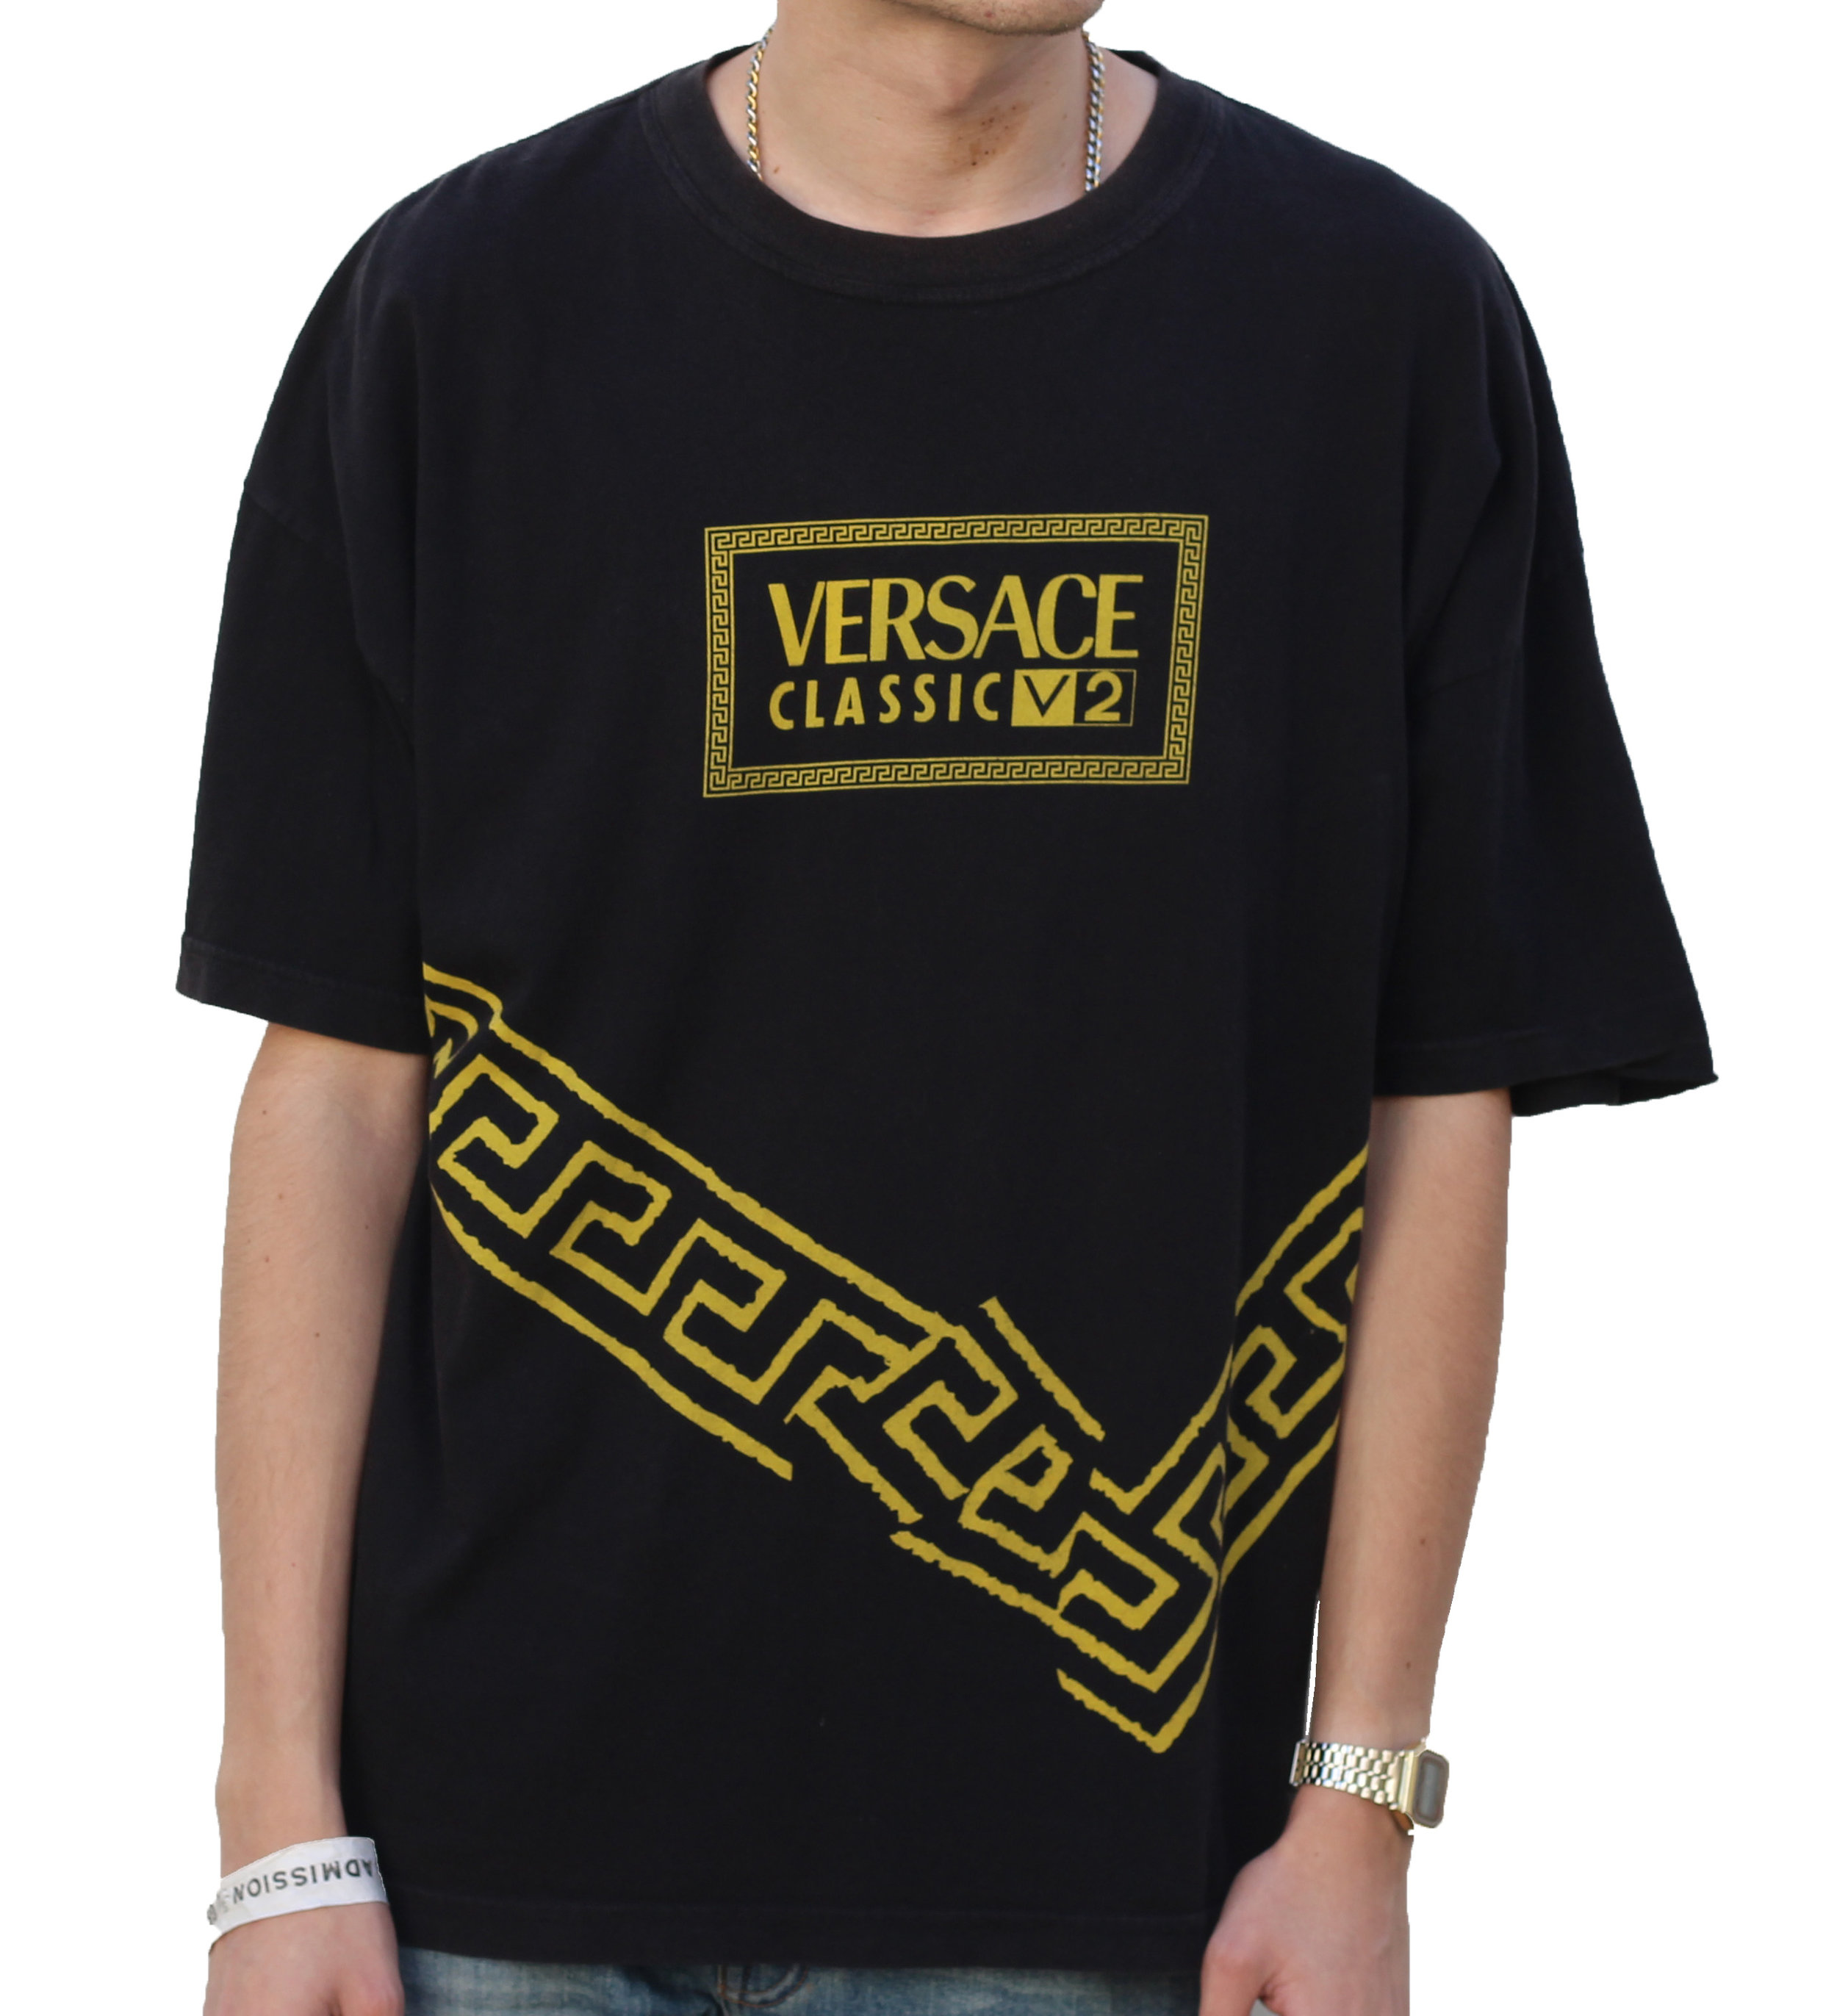 Versace V2 Black / Yellow T Shirt (Size L) — Roots